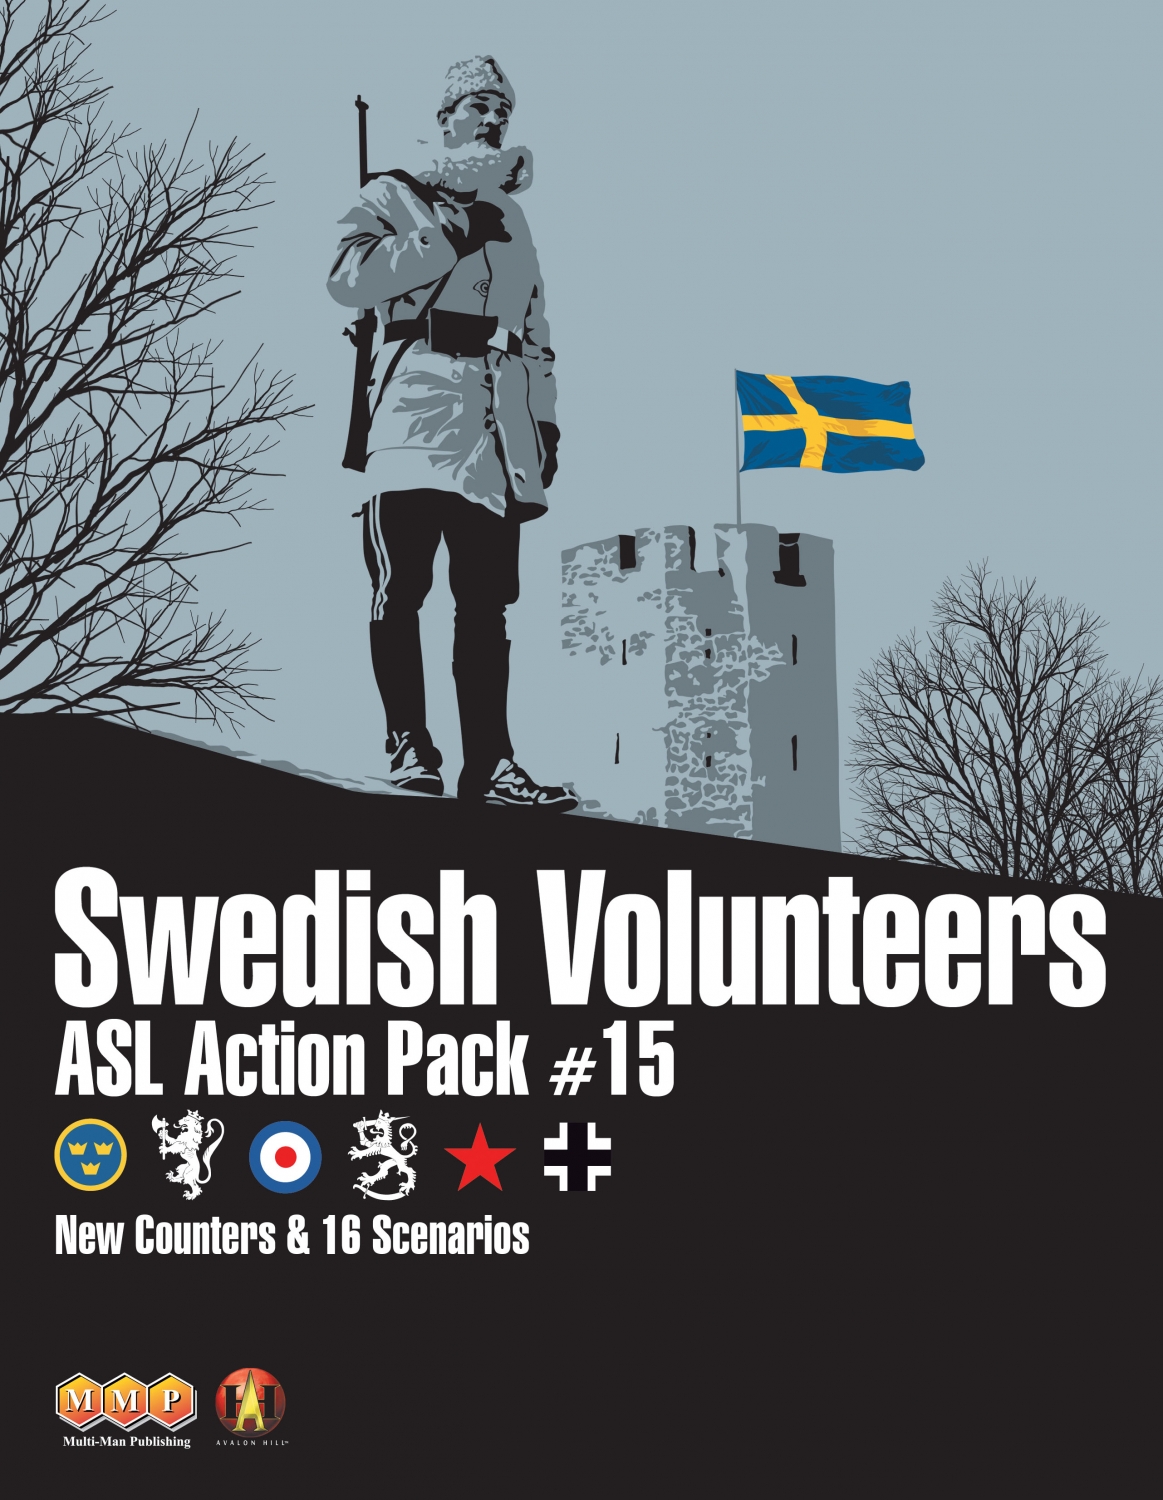 ASL Action Pack #15 - Swedish Volunteers